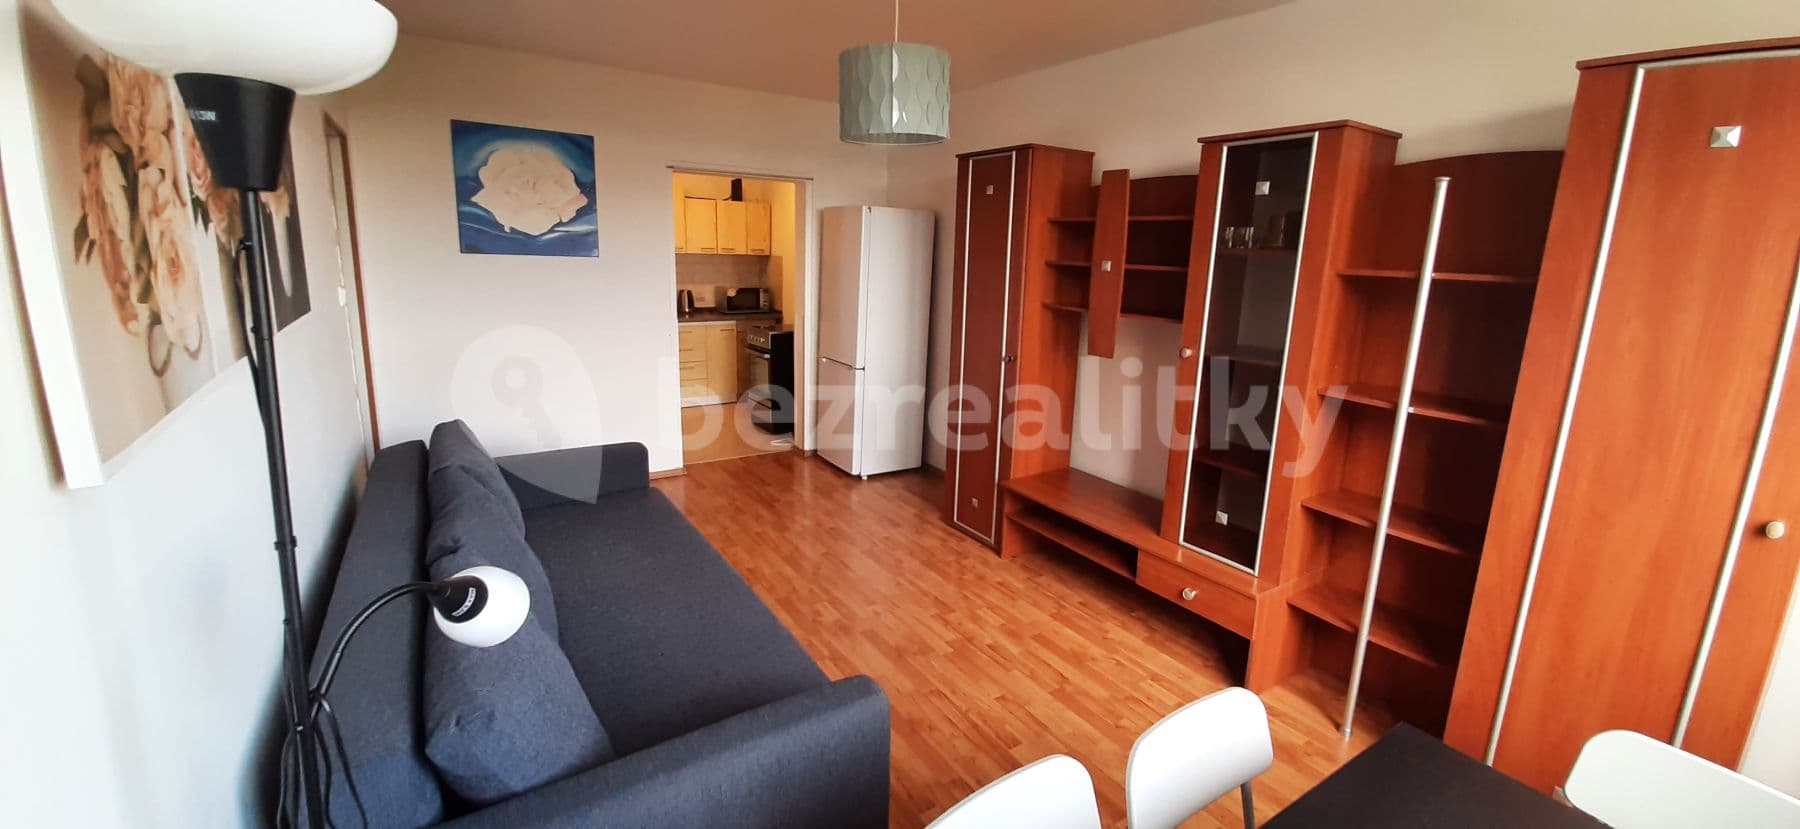 1 bedroom with open-plan kitchen flat to rent, 43 m², Mendelova, Prague, Prague